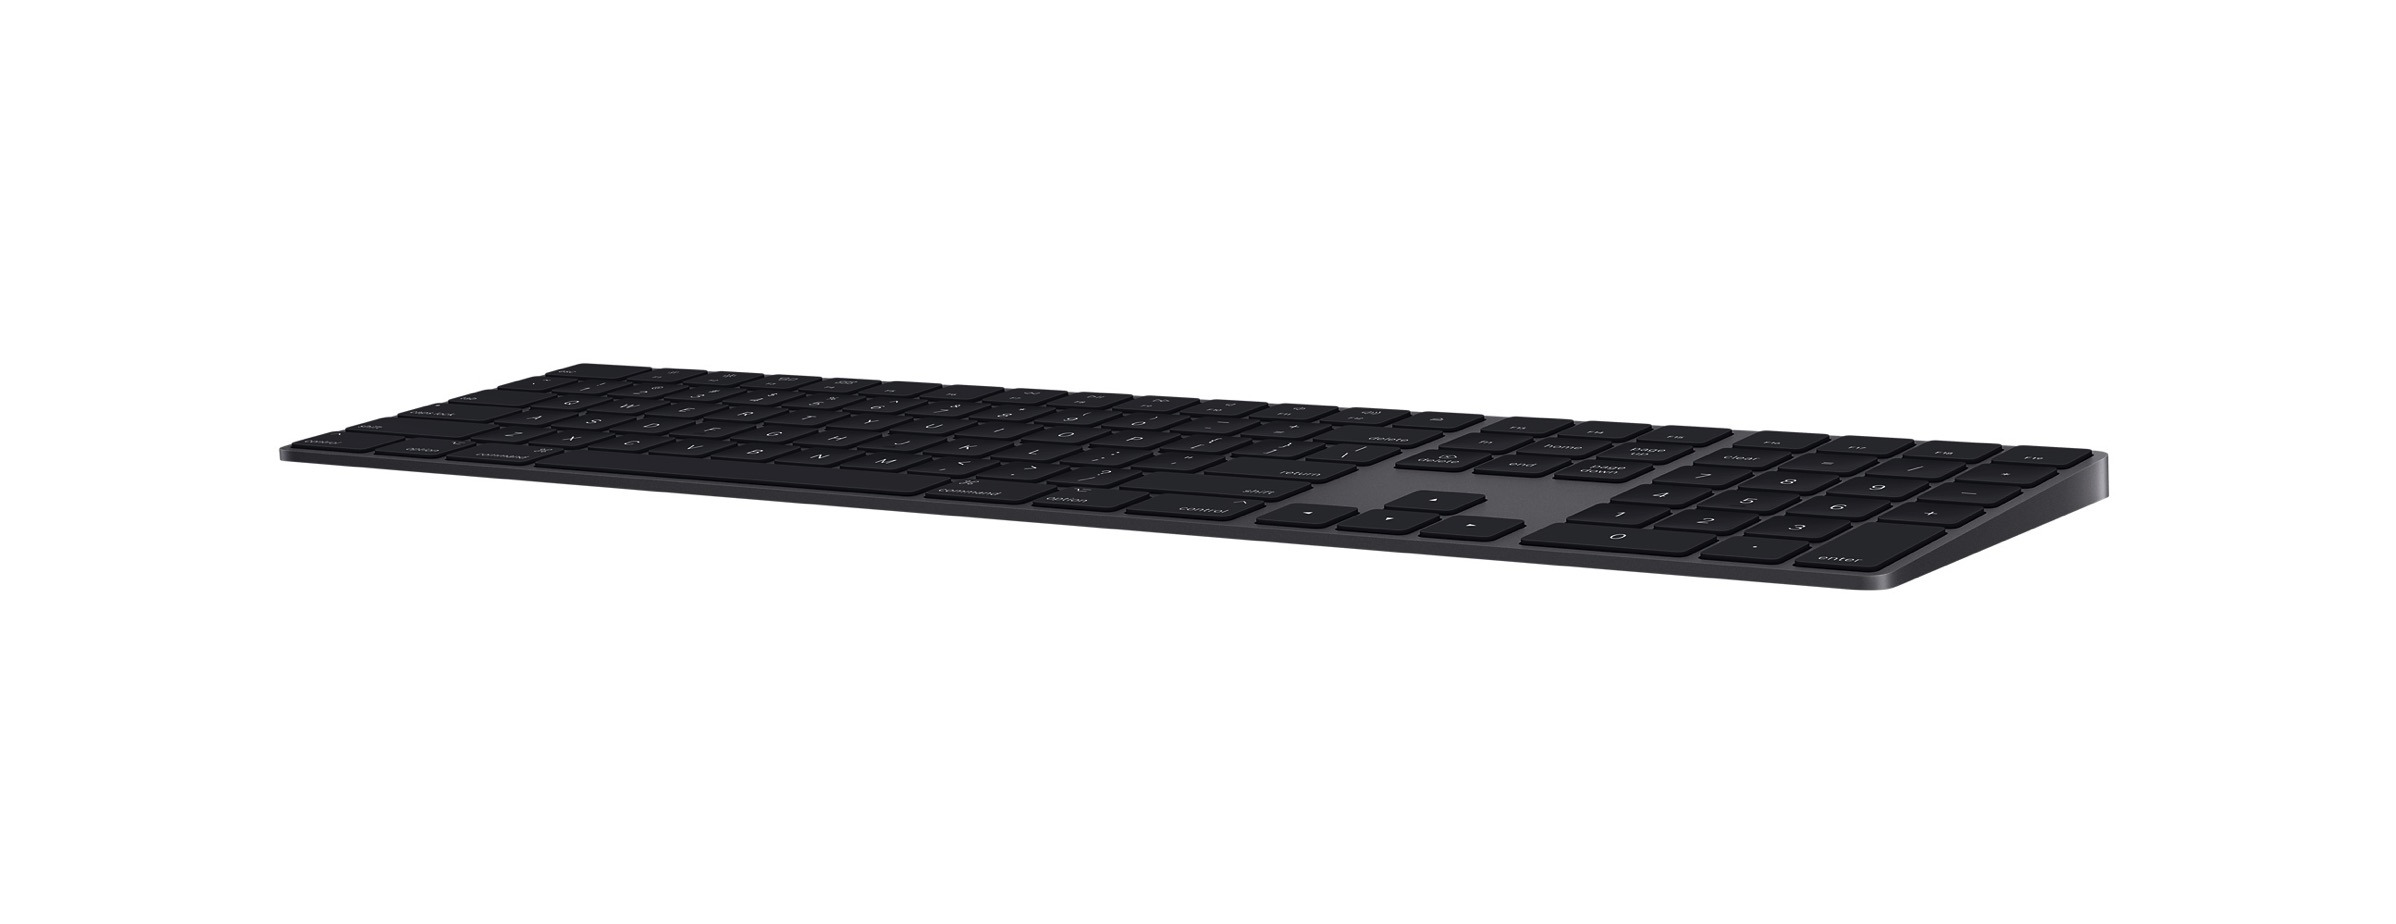 Vervormen bord moederlijk Apple Magic Keyboard met numeriek toetsenbord